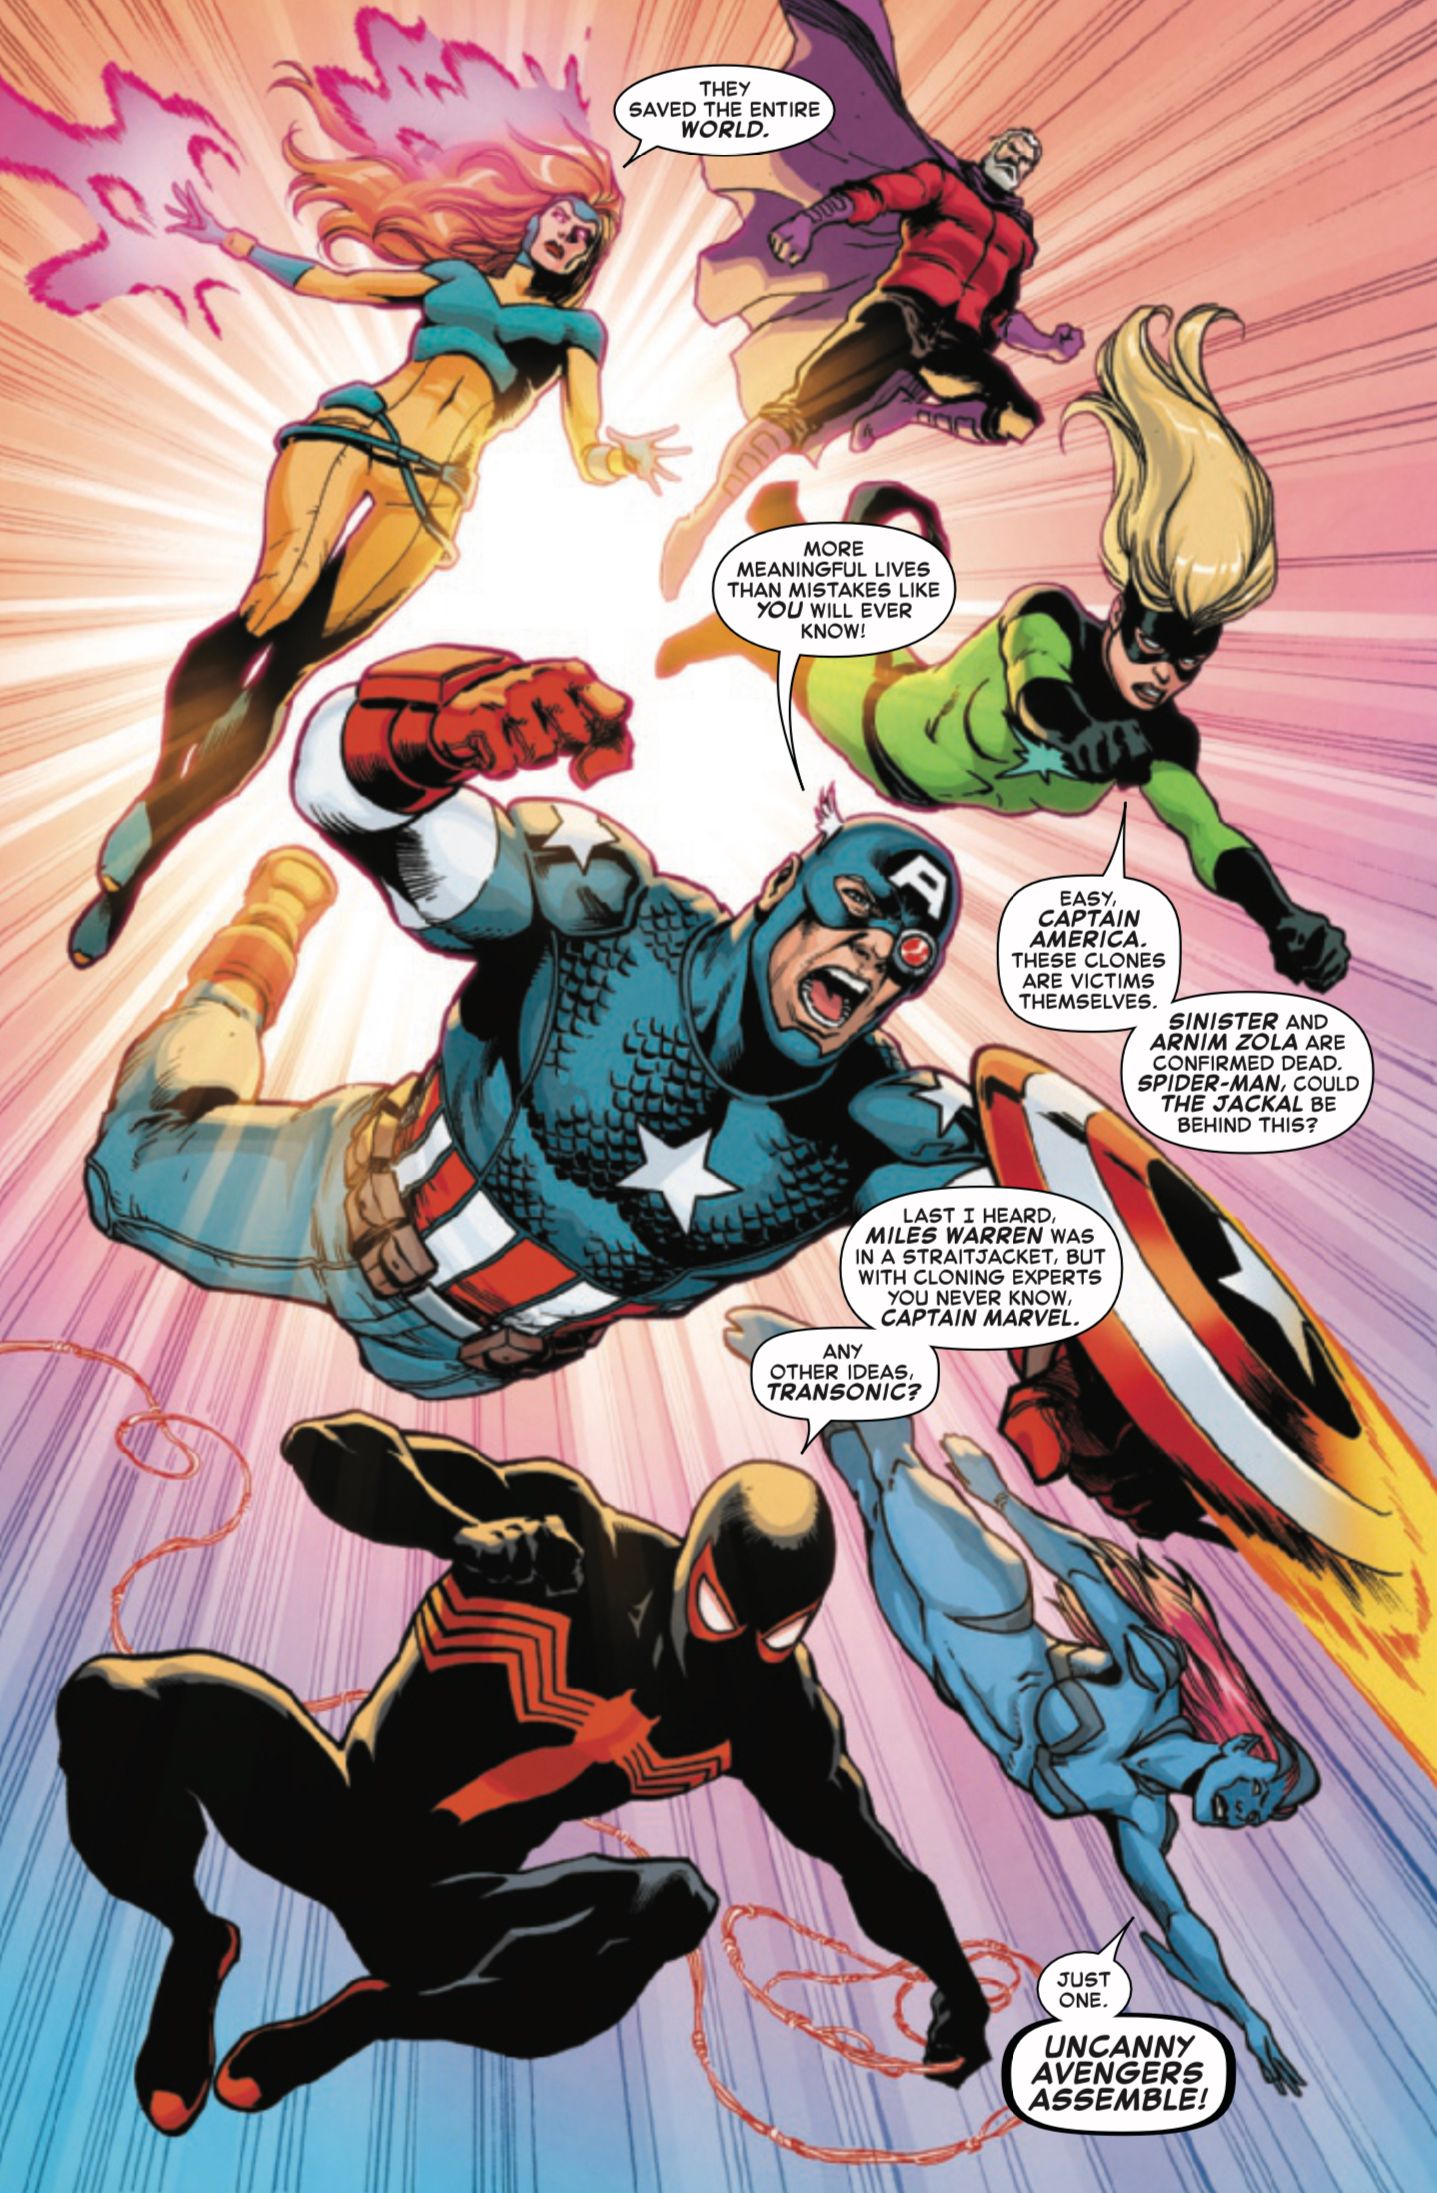 Uncanny Avengers, w tym Jean Grey, Magneto, Kapitan Ameryka, Spider-Man, Kapitan Marvel i Transonic